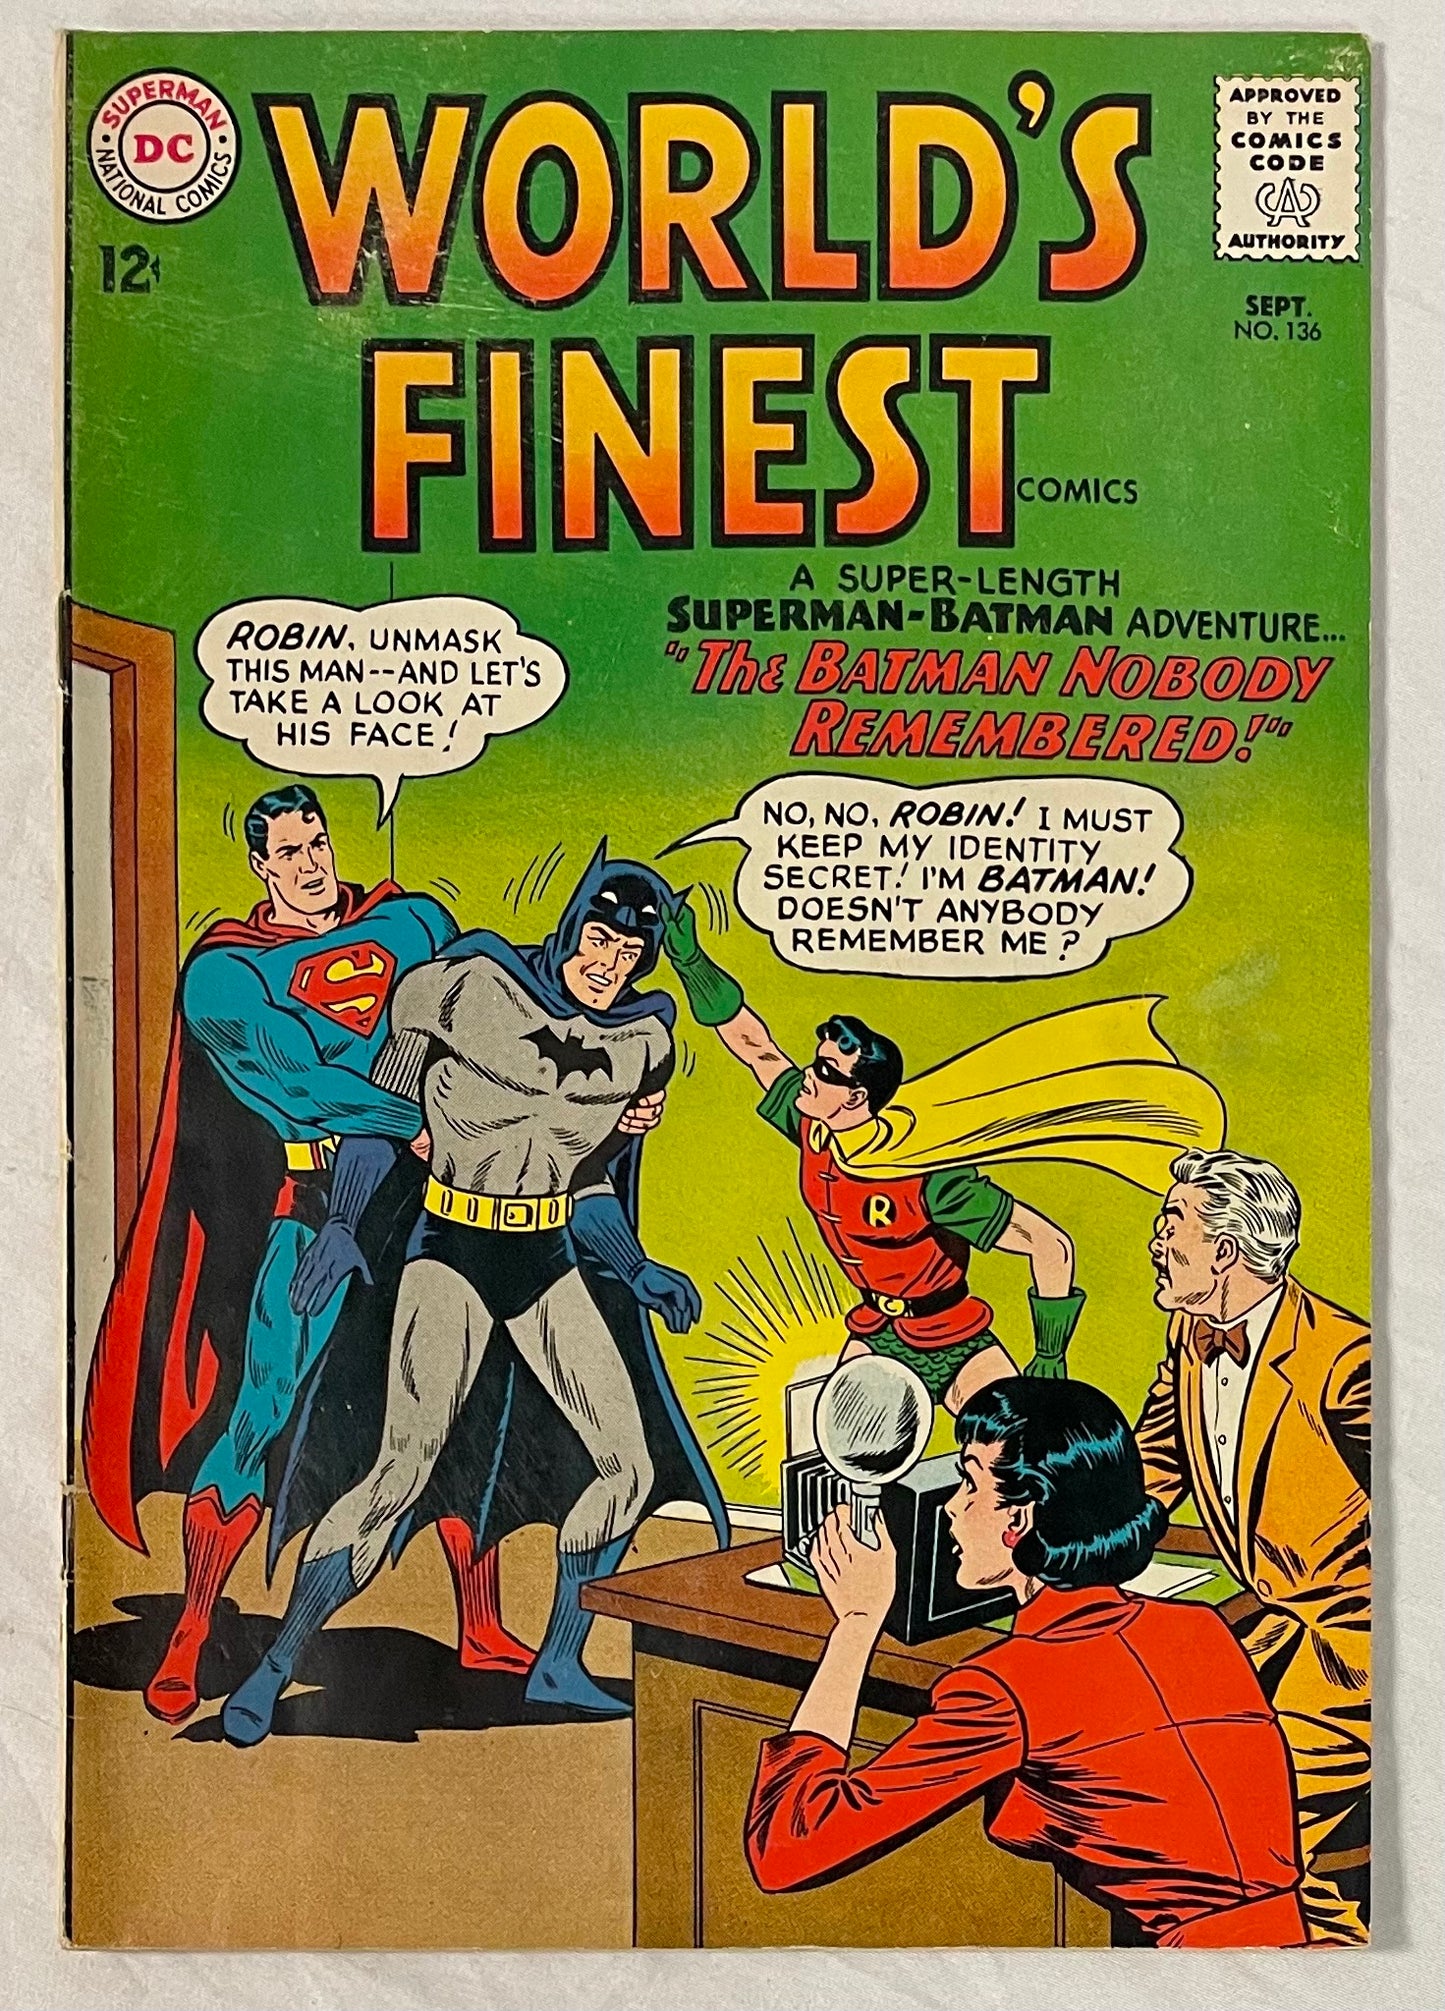 DC Comics World's Finest No. 136